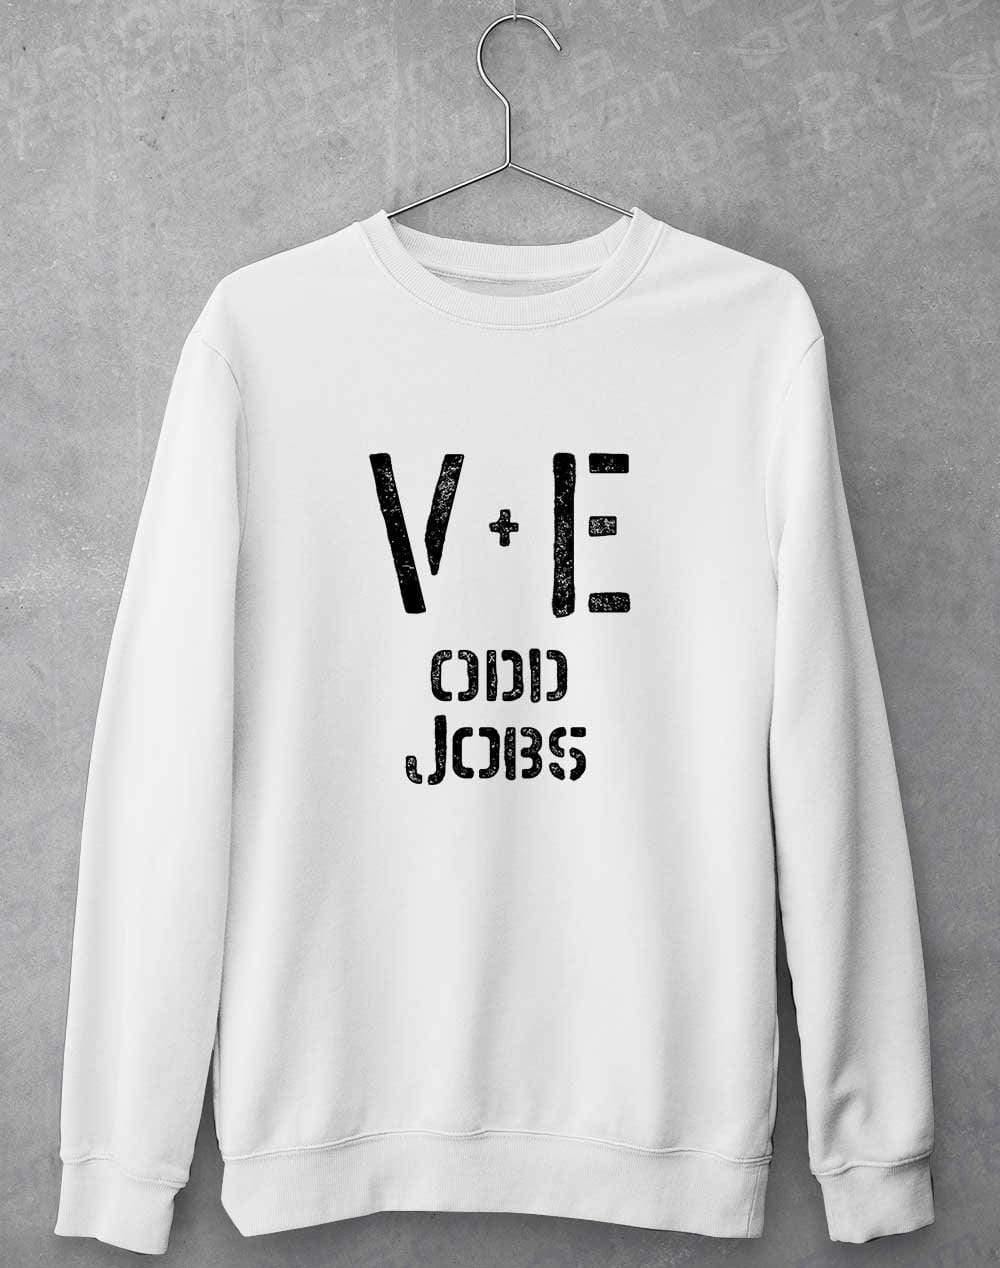 Val and Earl's Odd Jobs Sweatshirt XS / Arctic White  - Off World Tees